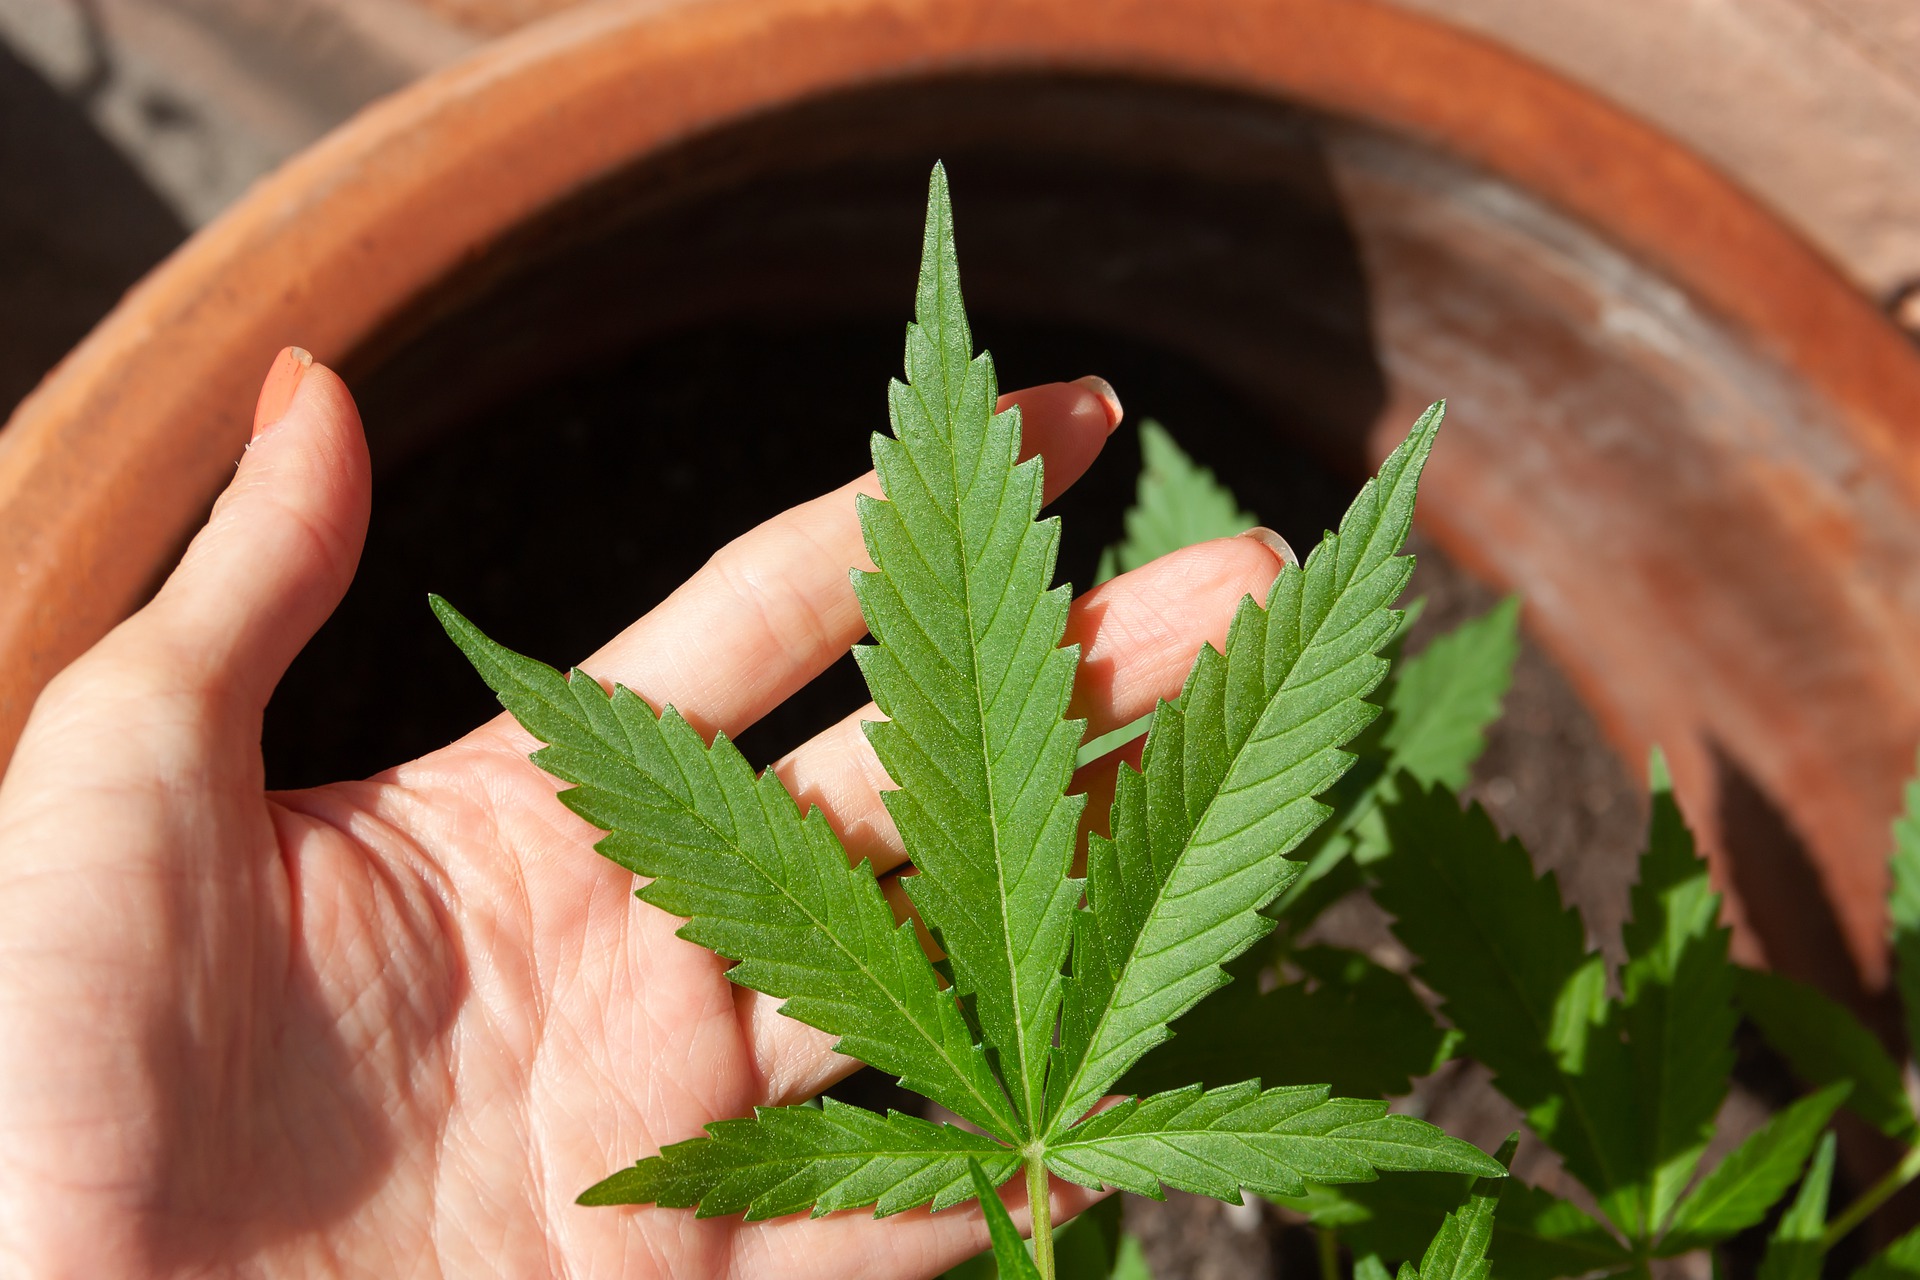 The organic growth of your marijuana business